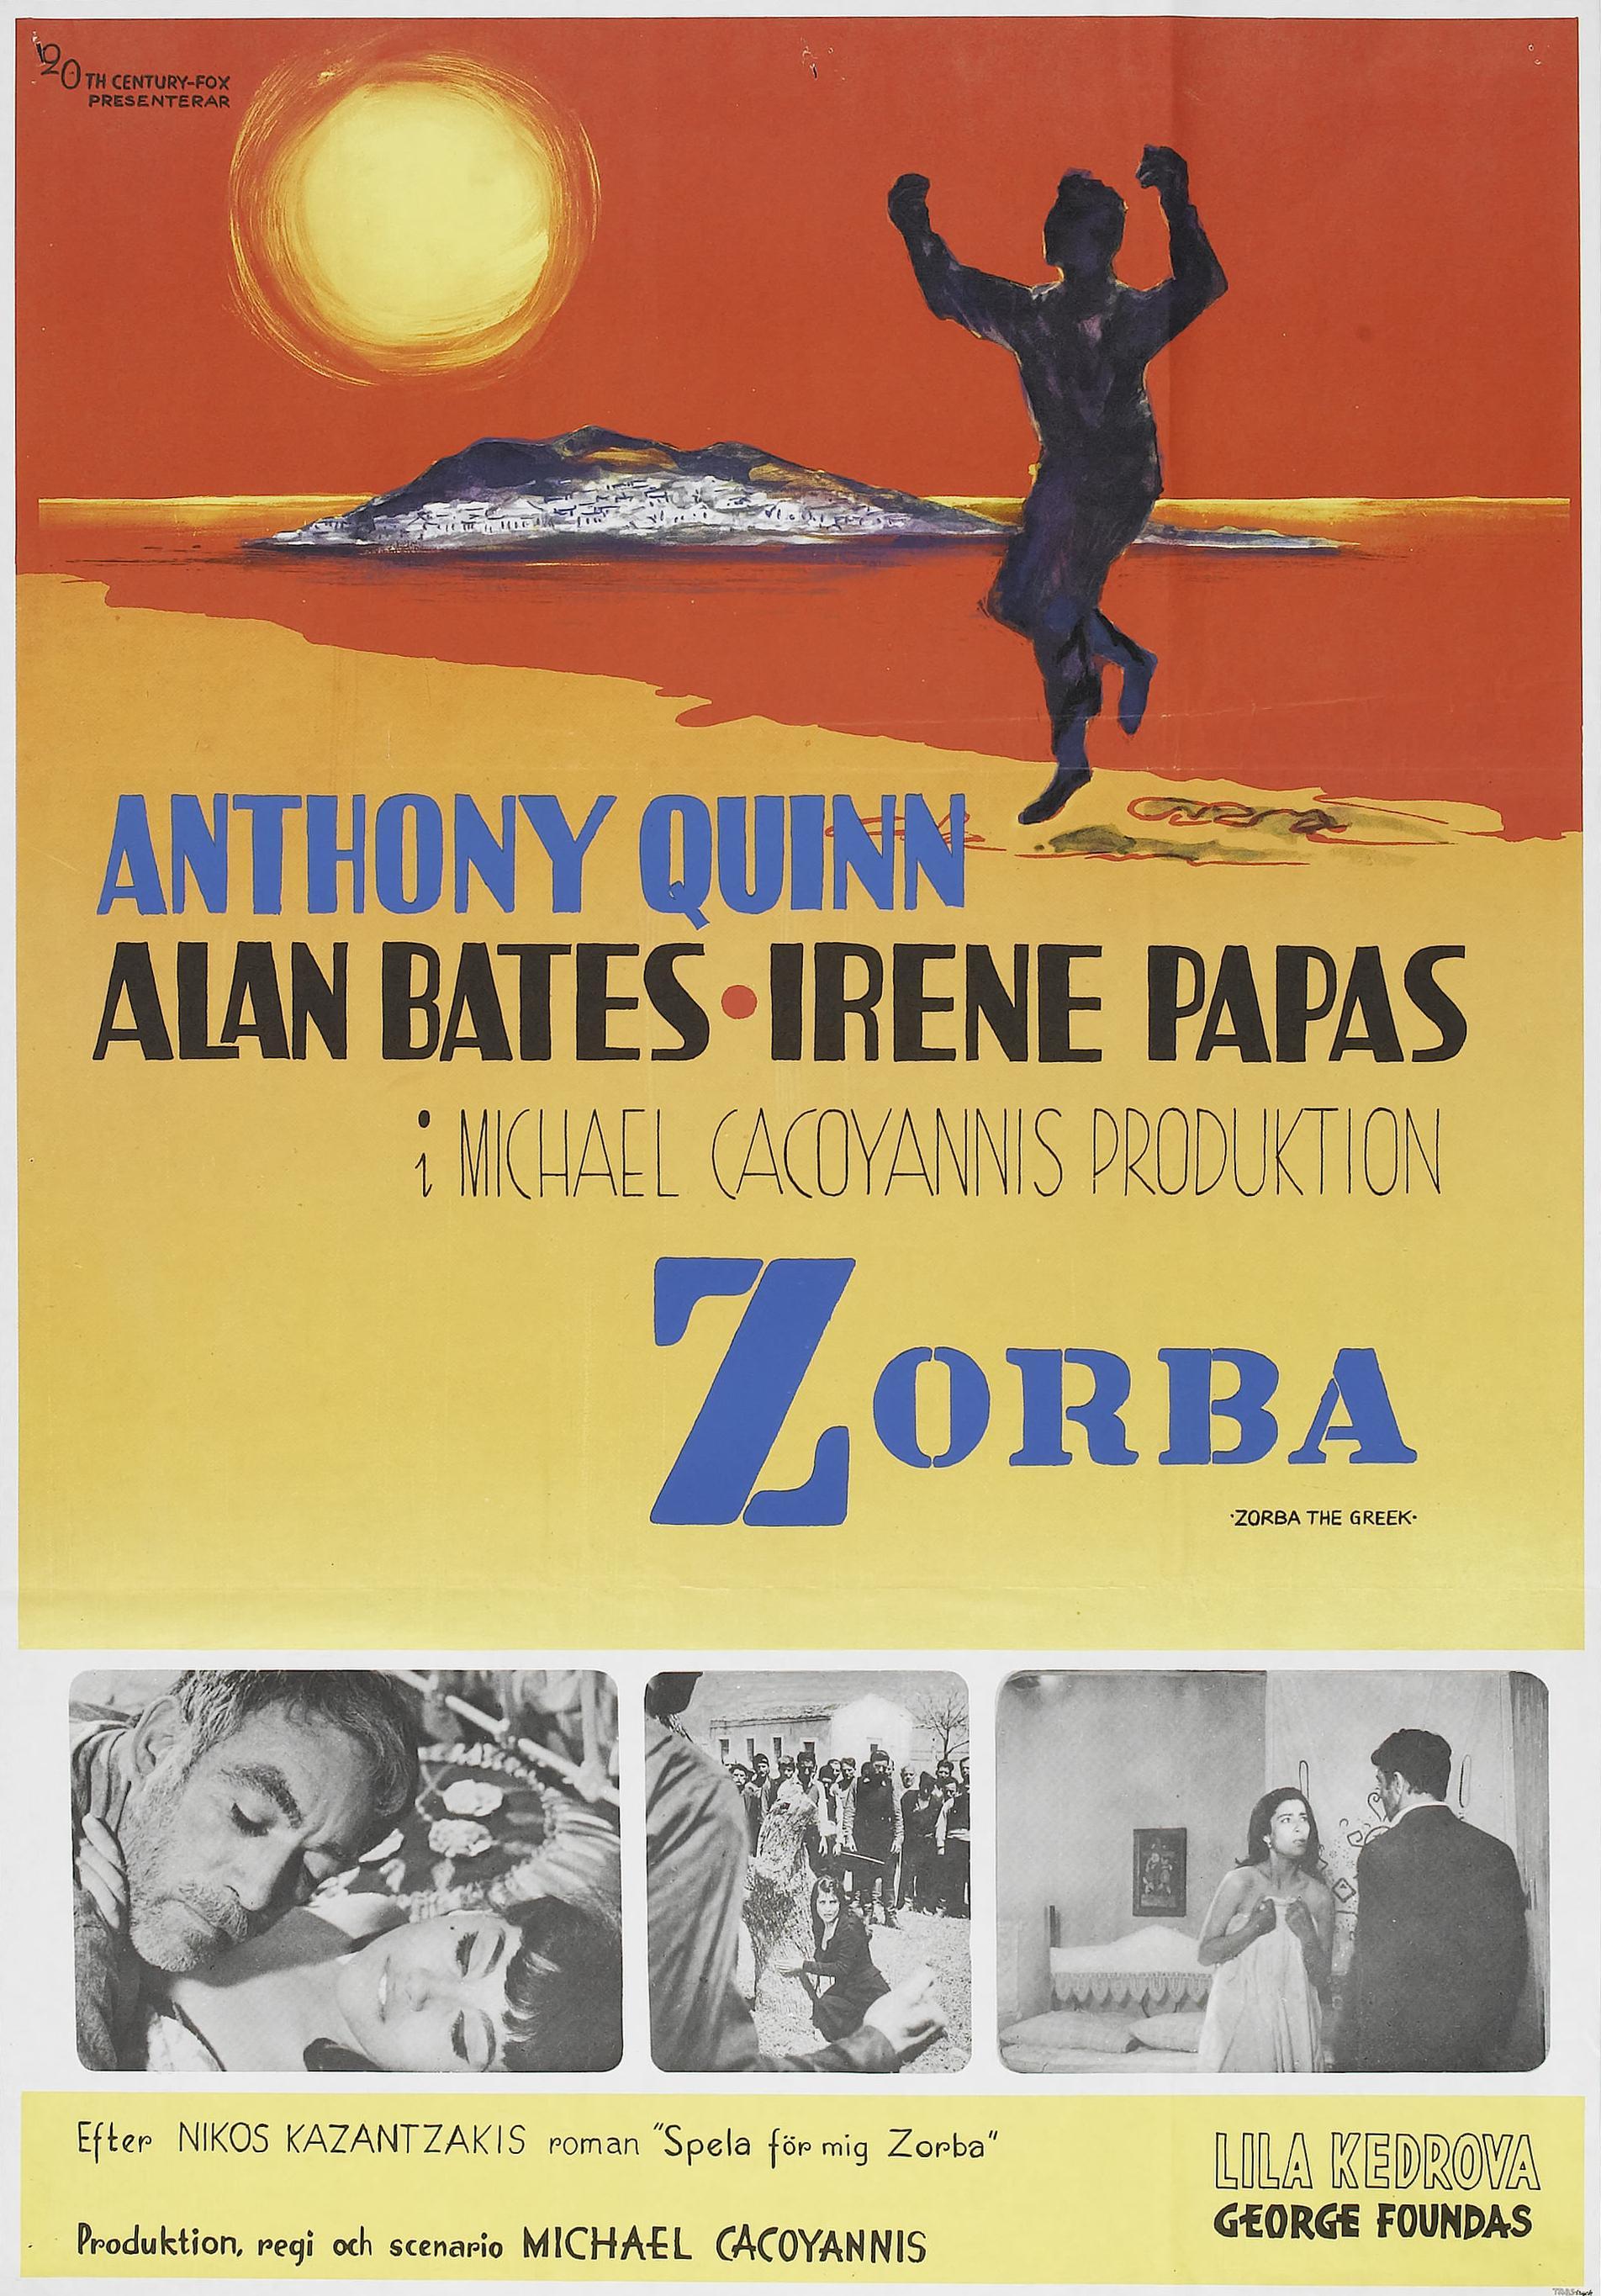 Постер фильма Грек Зорба | Alexis Zorbas